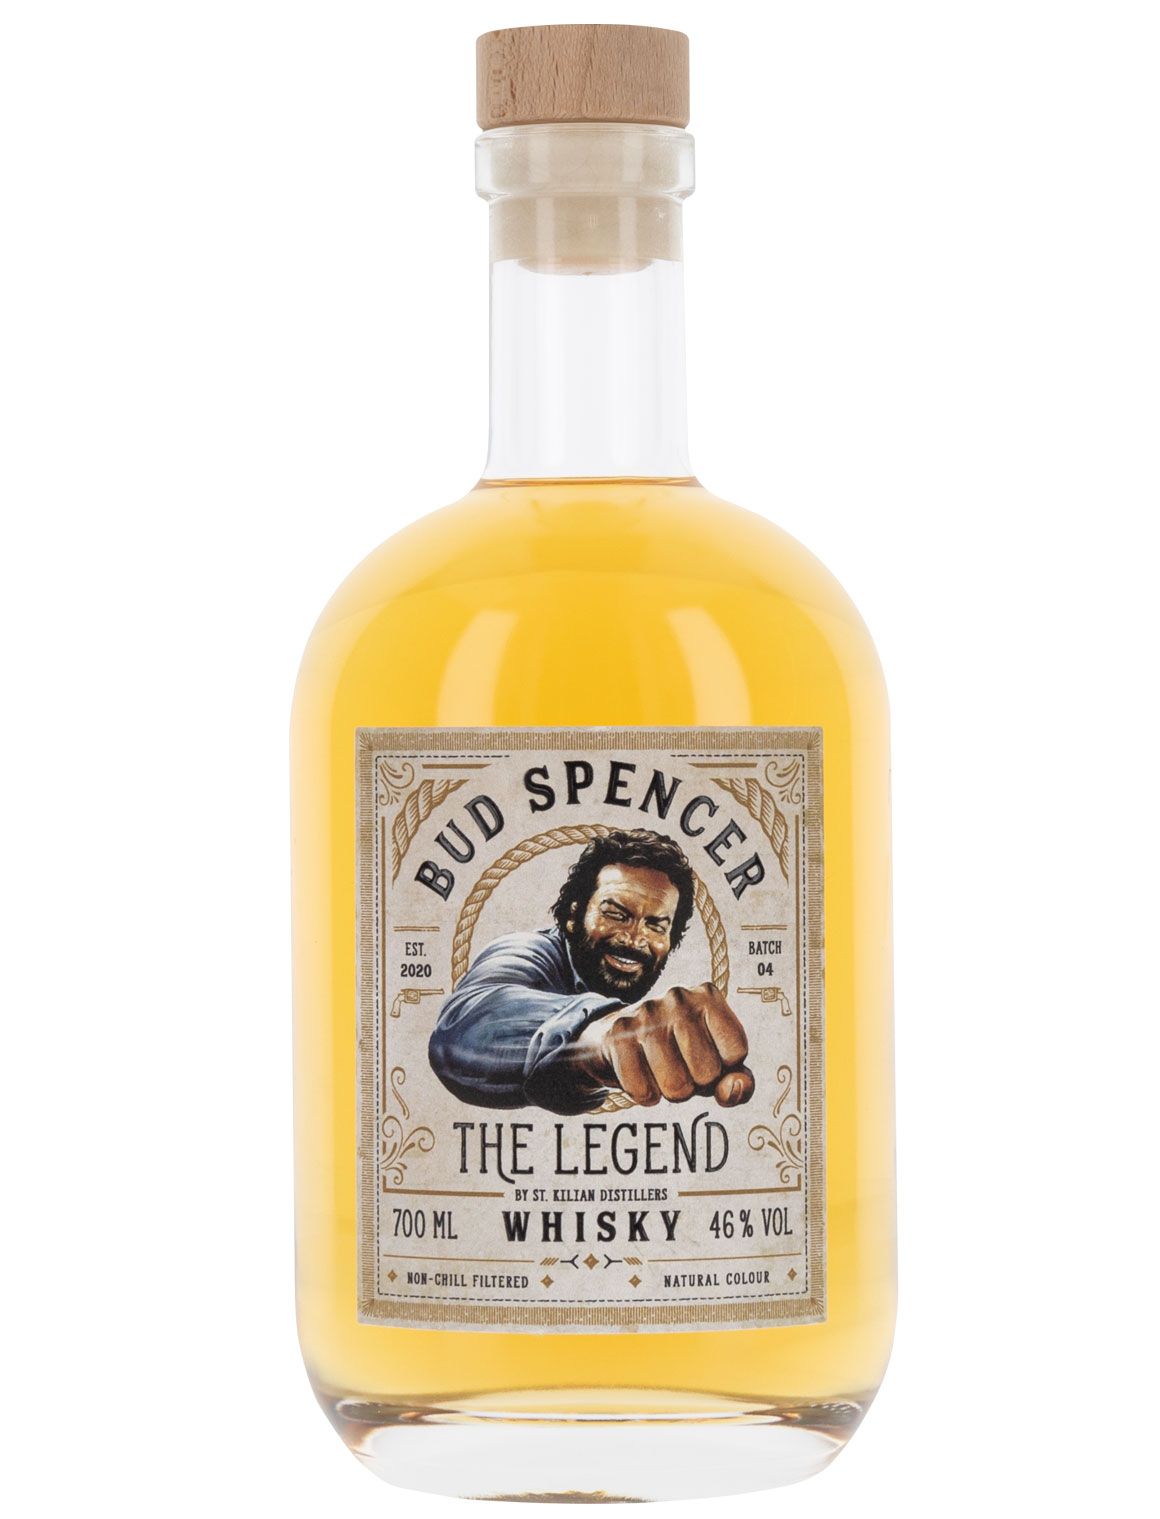 Bud Spencer - The Legend - Whisky (mild), 0.7l - Single Malt Whisky from  Germany St. Kilian Distillers